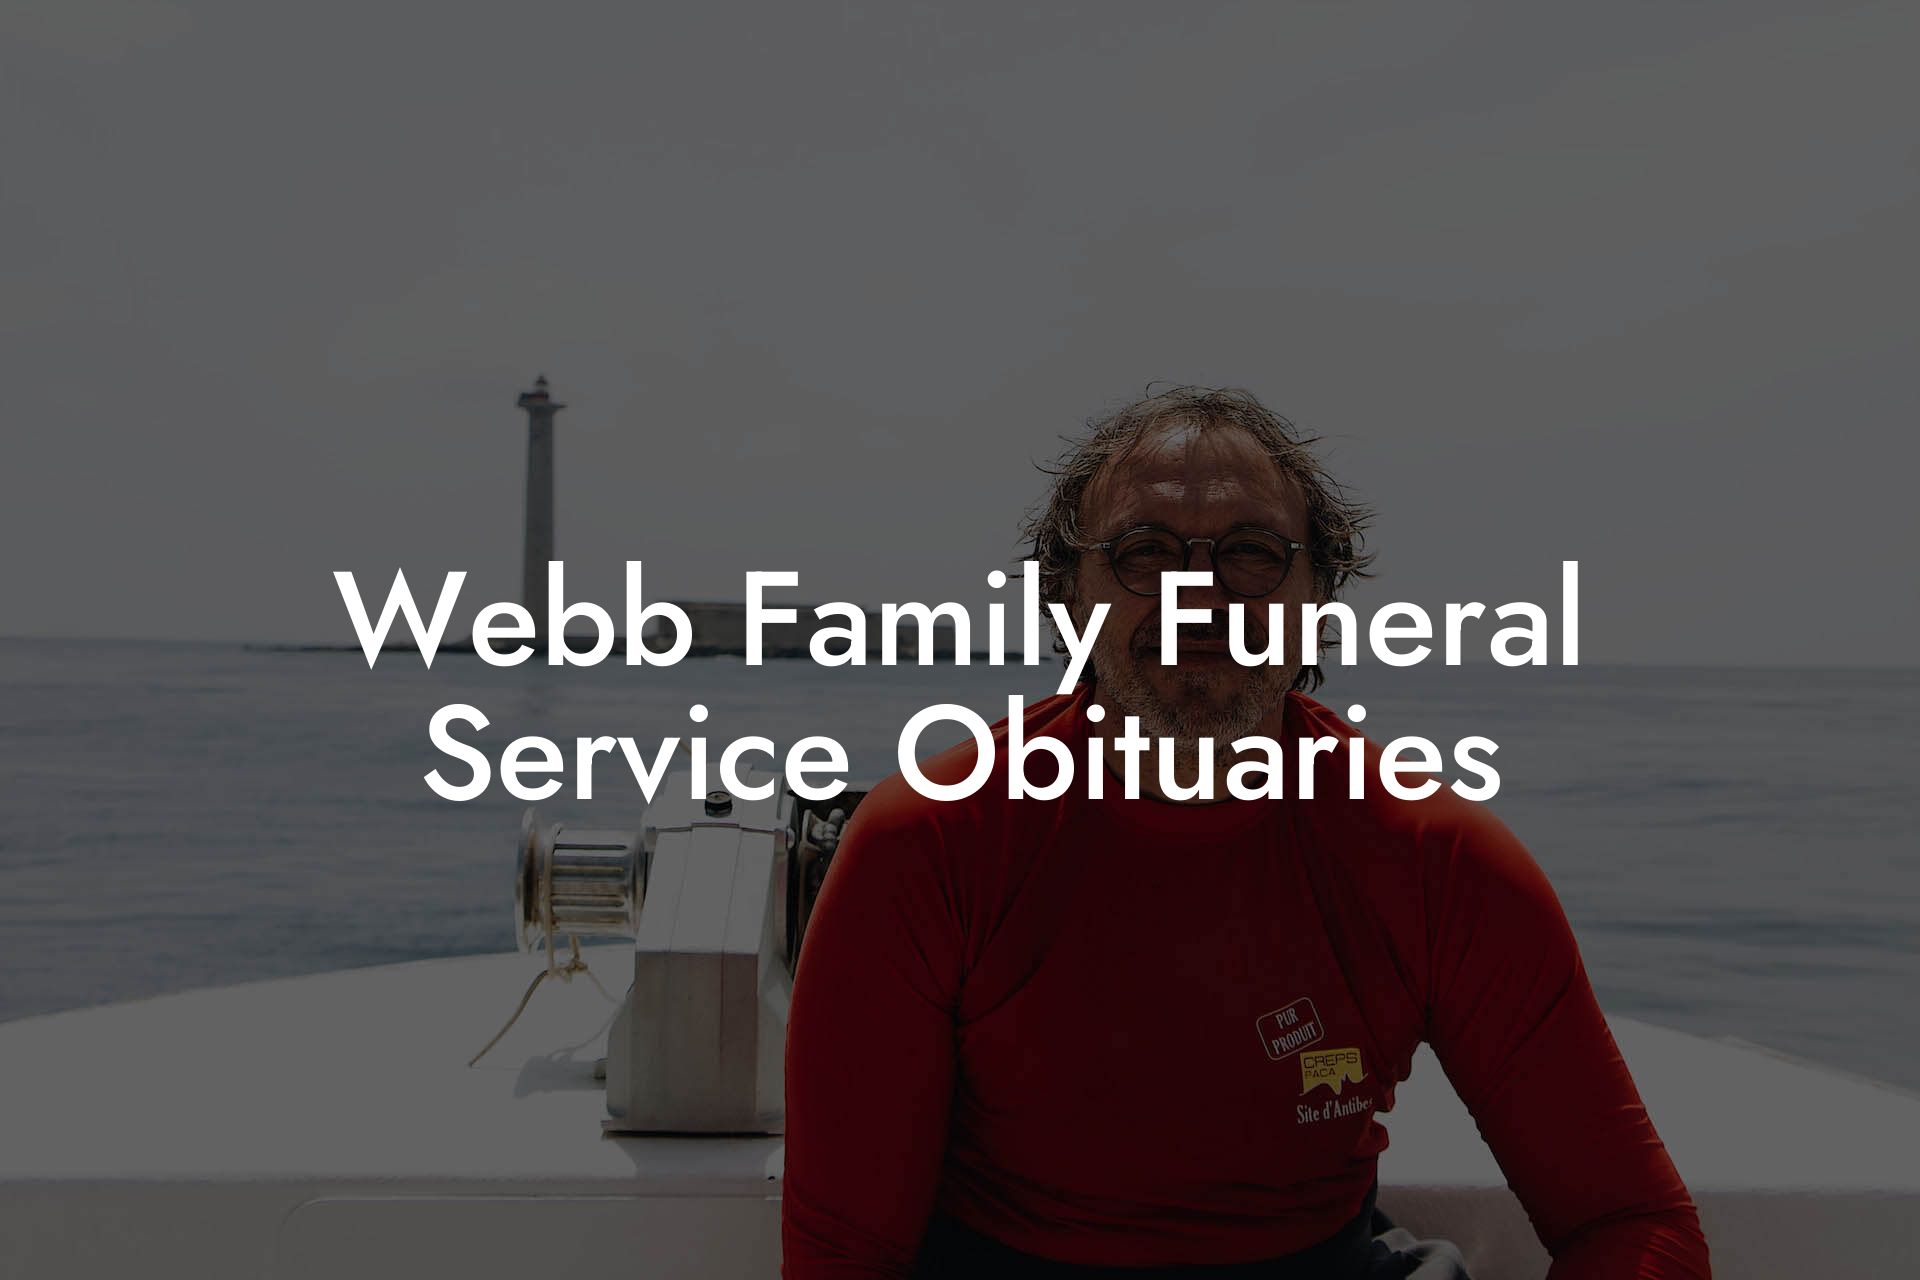 Webb Family Funeral Service Obituaries